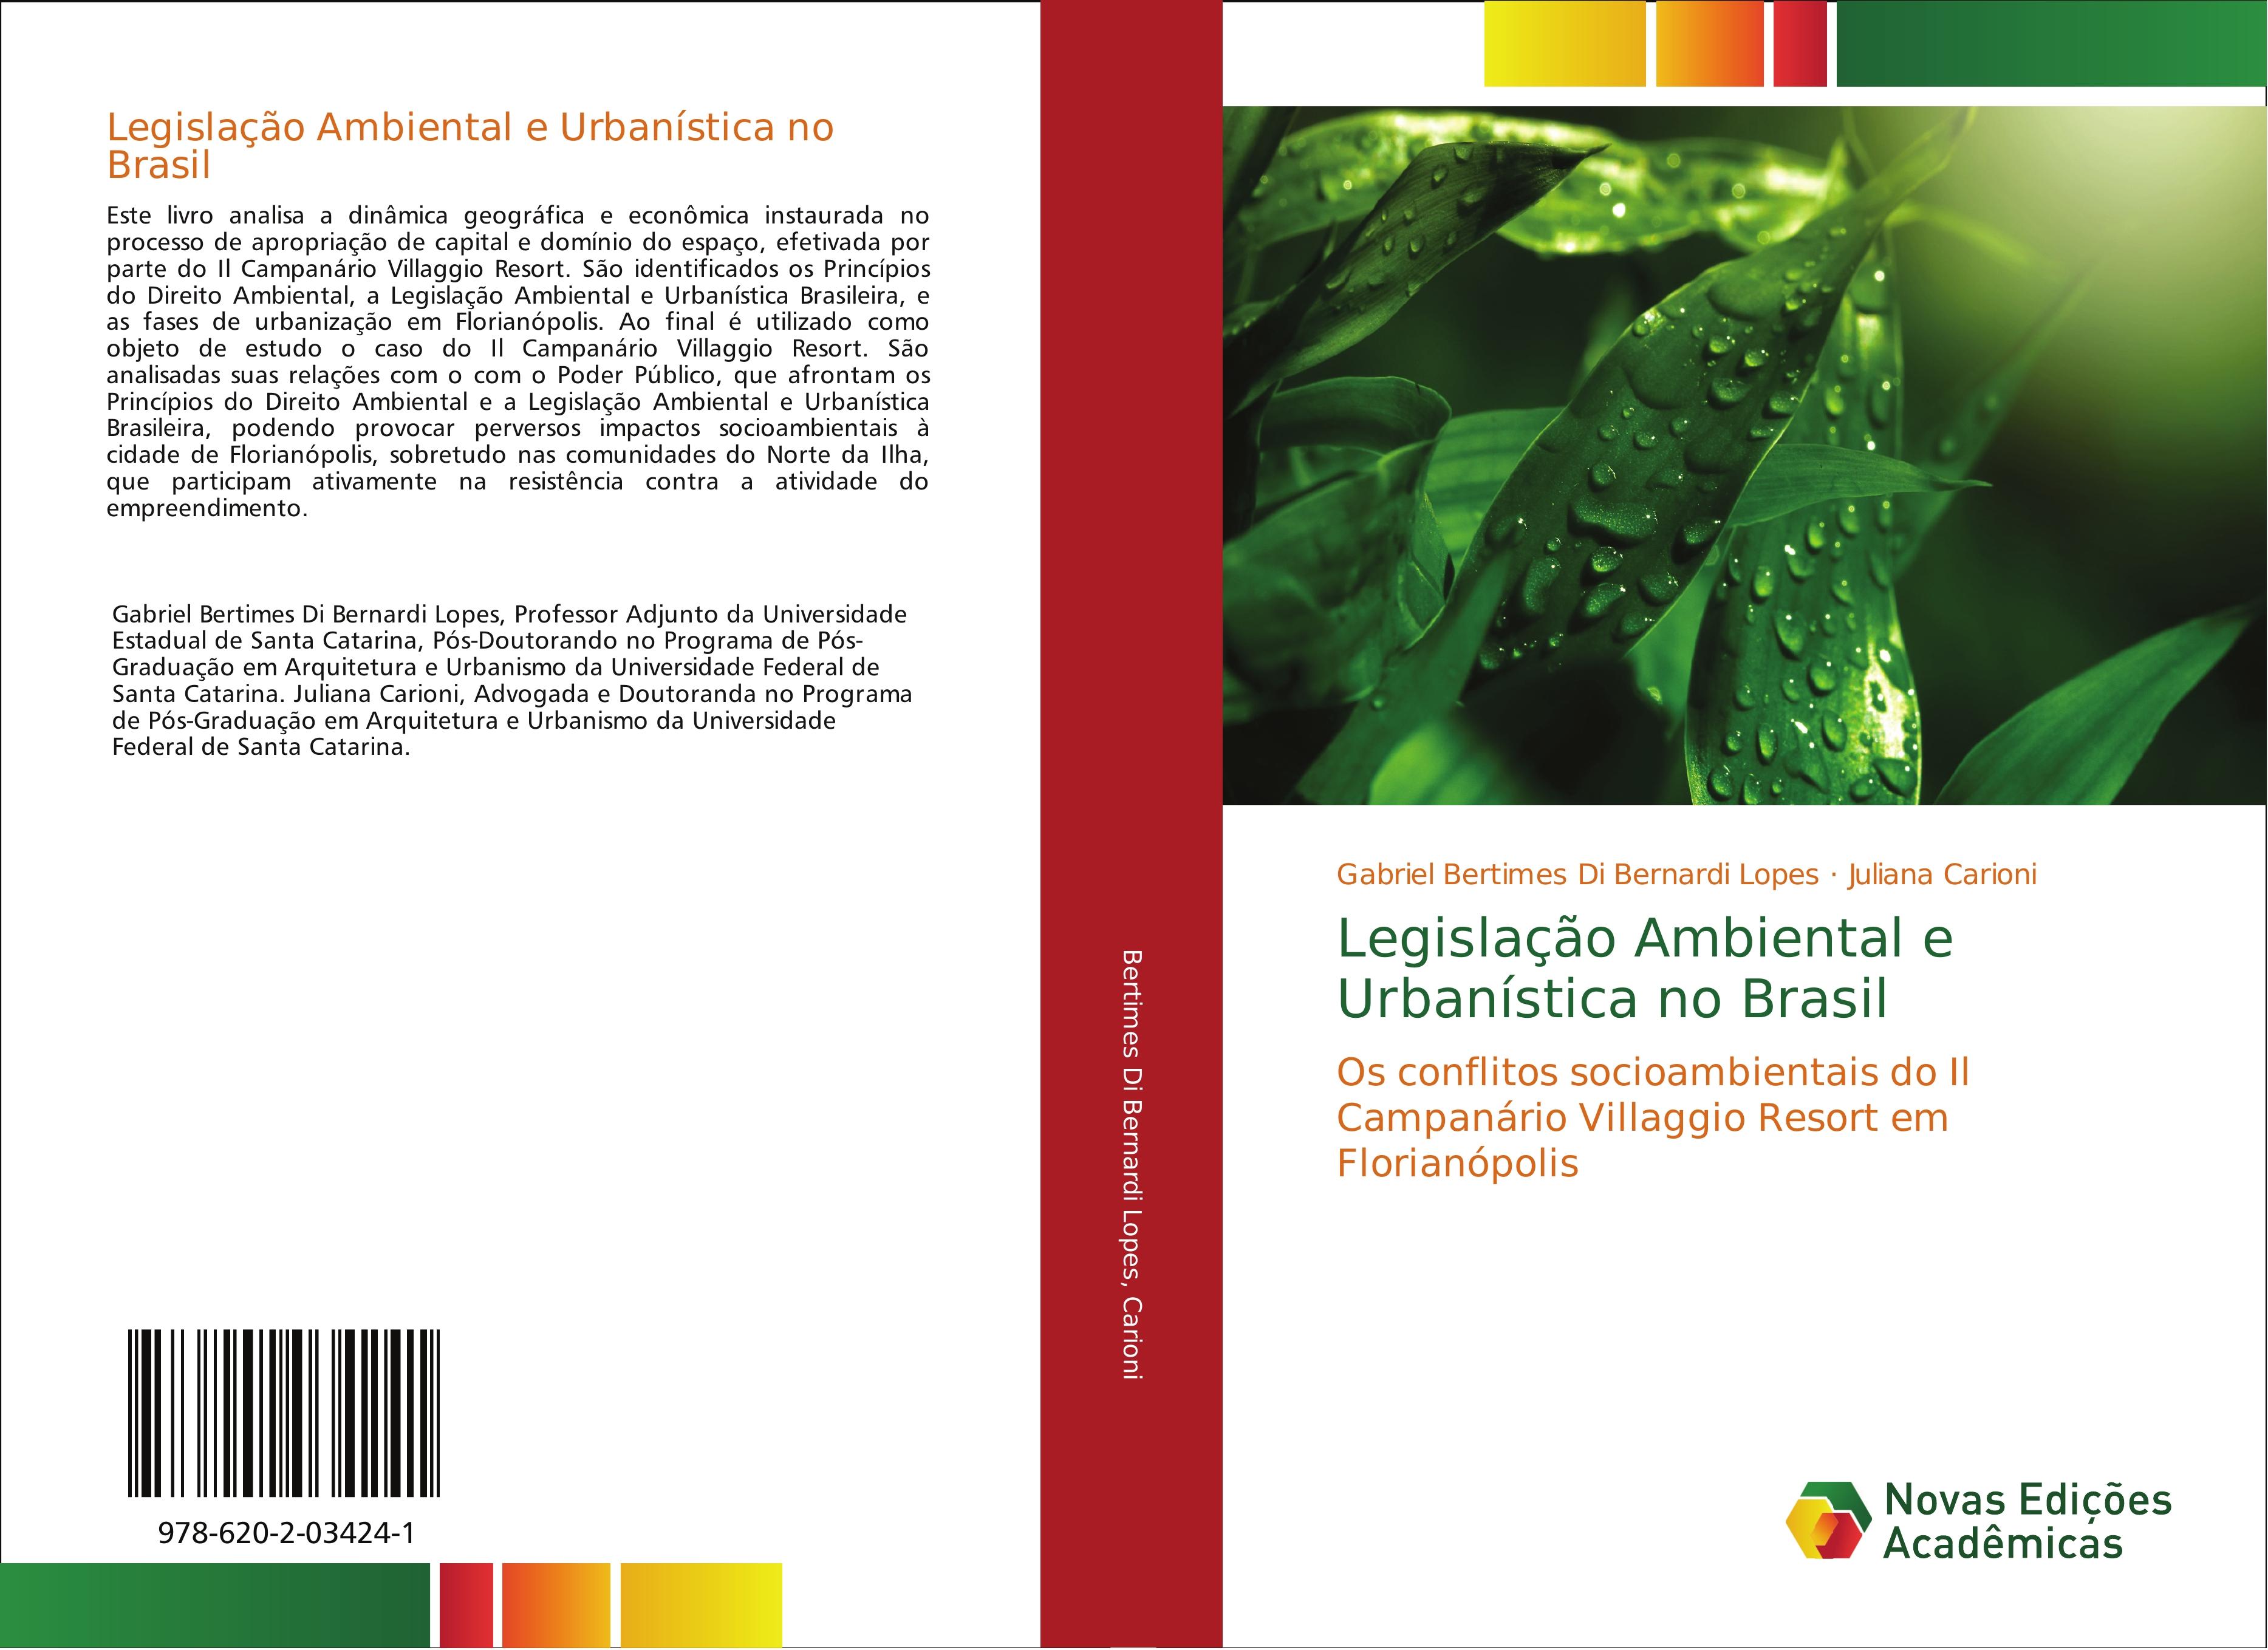 Legislação Ambiental e Urbanística no Brasil - Gabriel Bertimes Di Bernardi Lopes Juliana Carioni